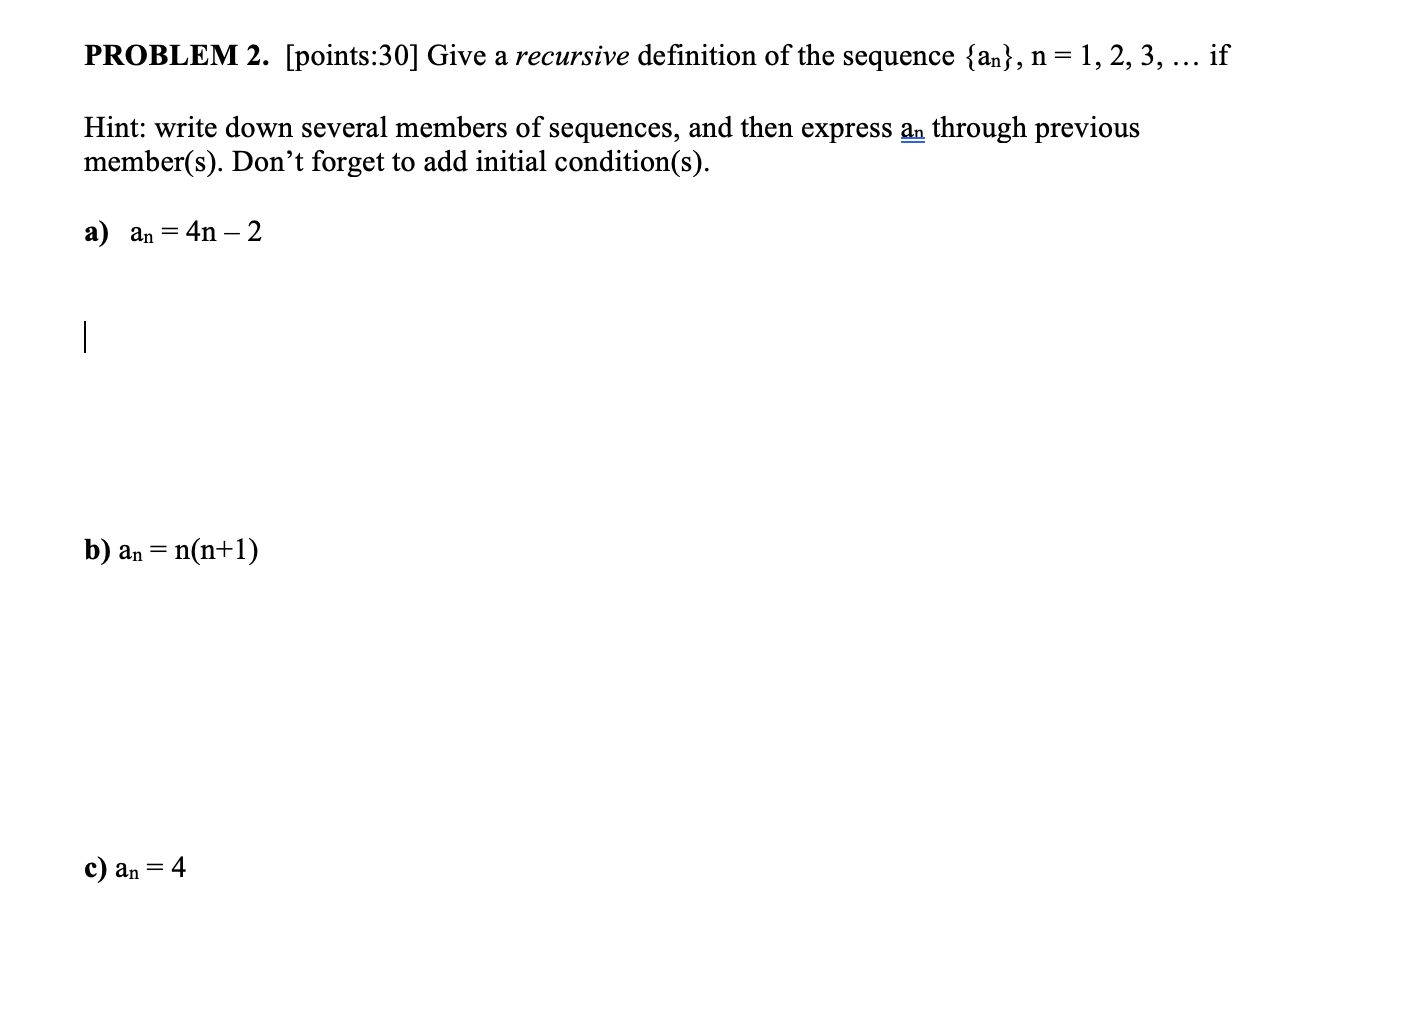 PROBLEM 19. [points:19] Give a recursive definition of  Chegg.com